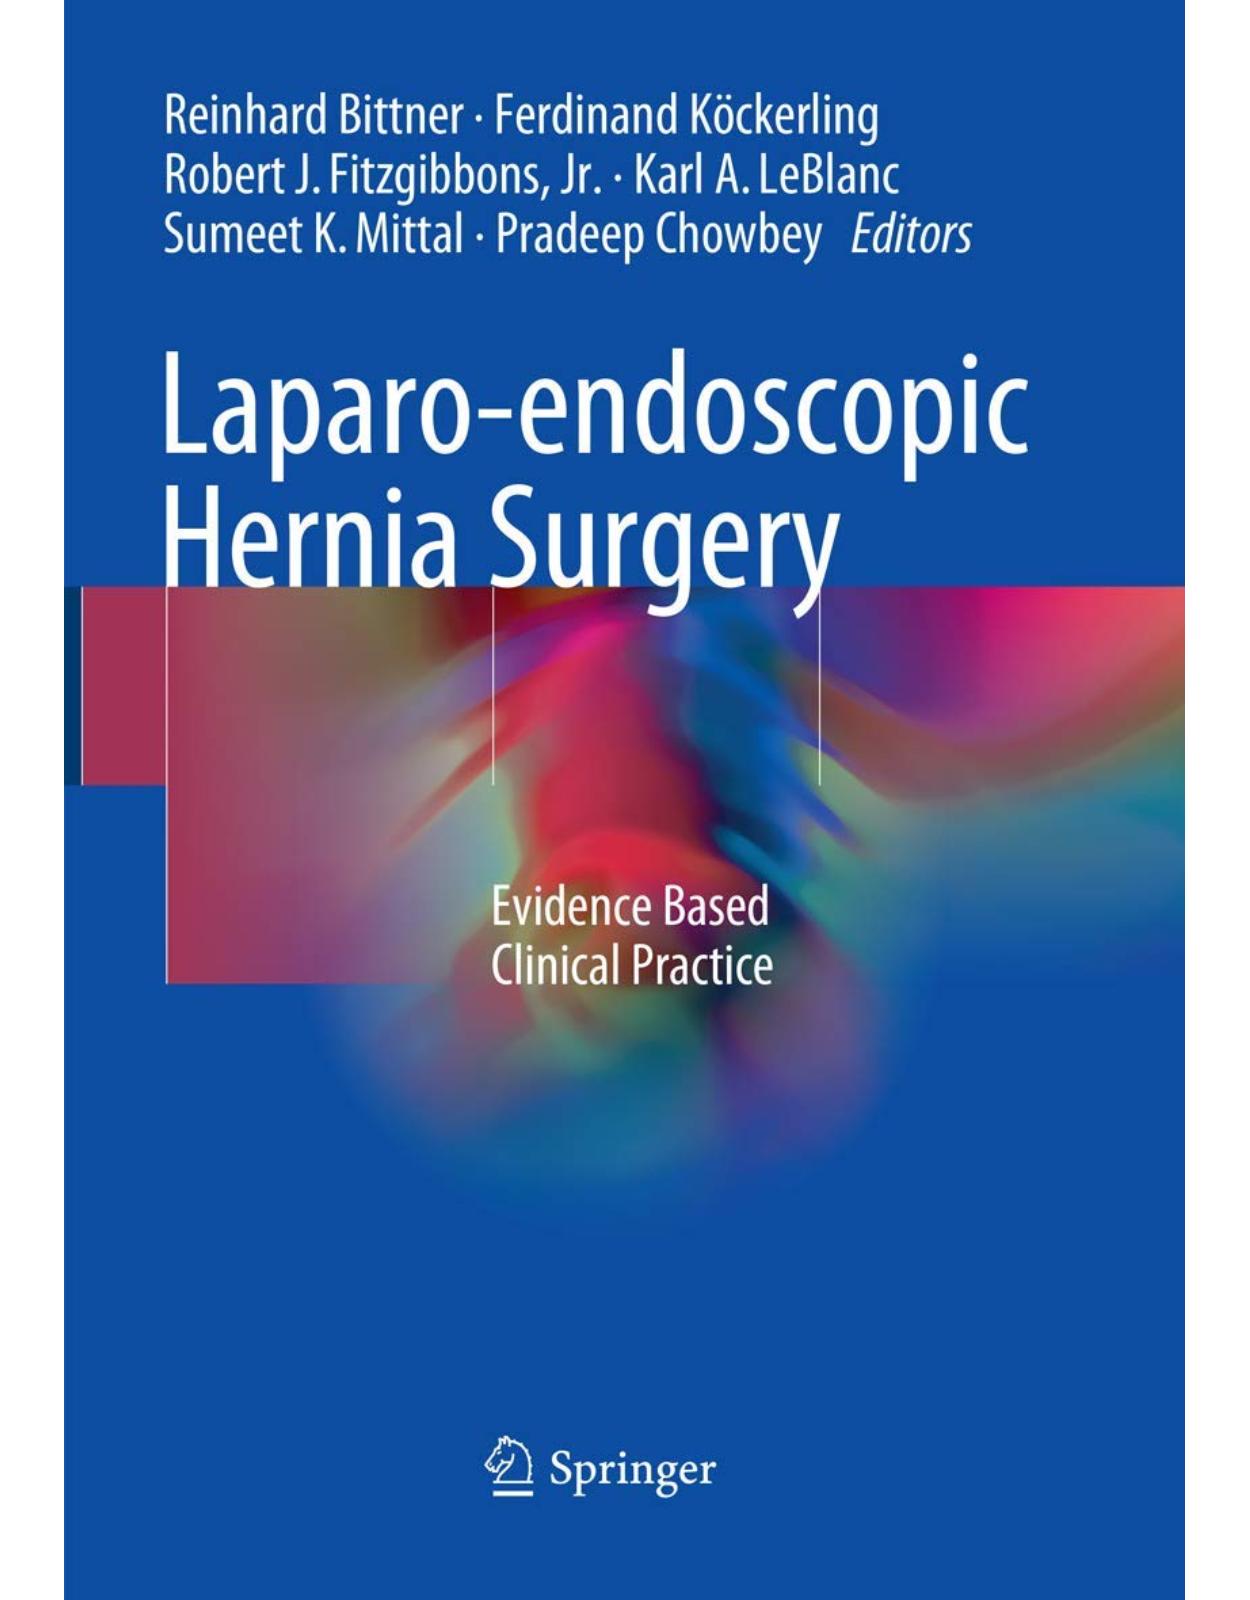 Laparo-endoscopic Hernia Surgery: Evidence Based Clinical Practice